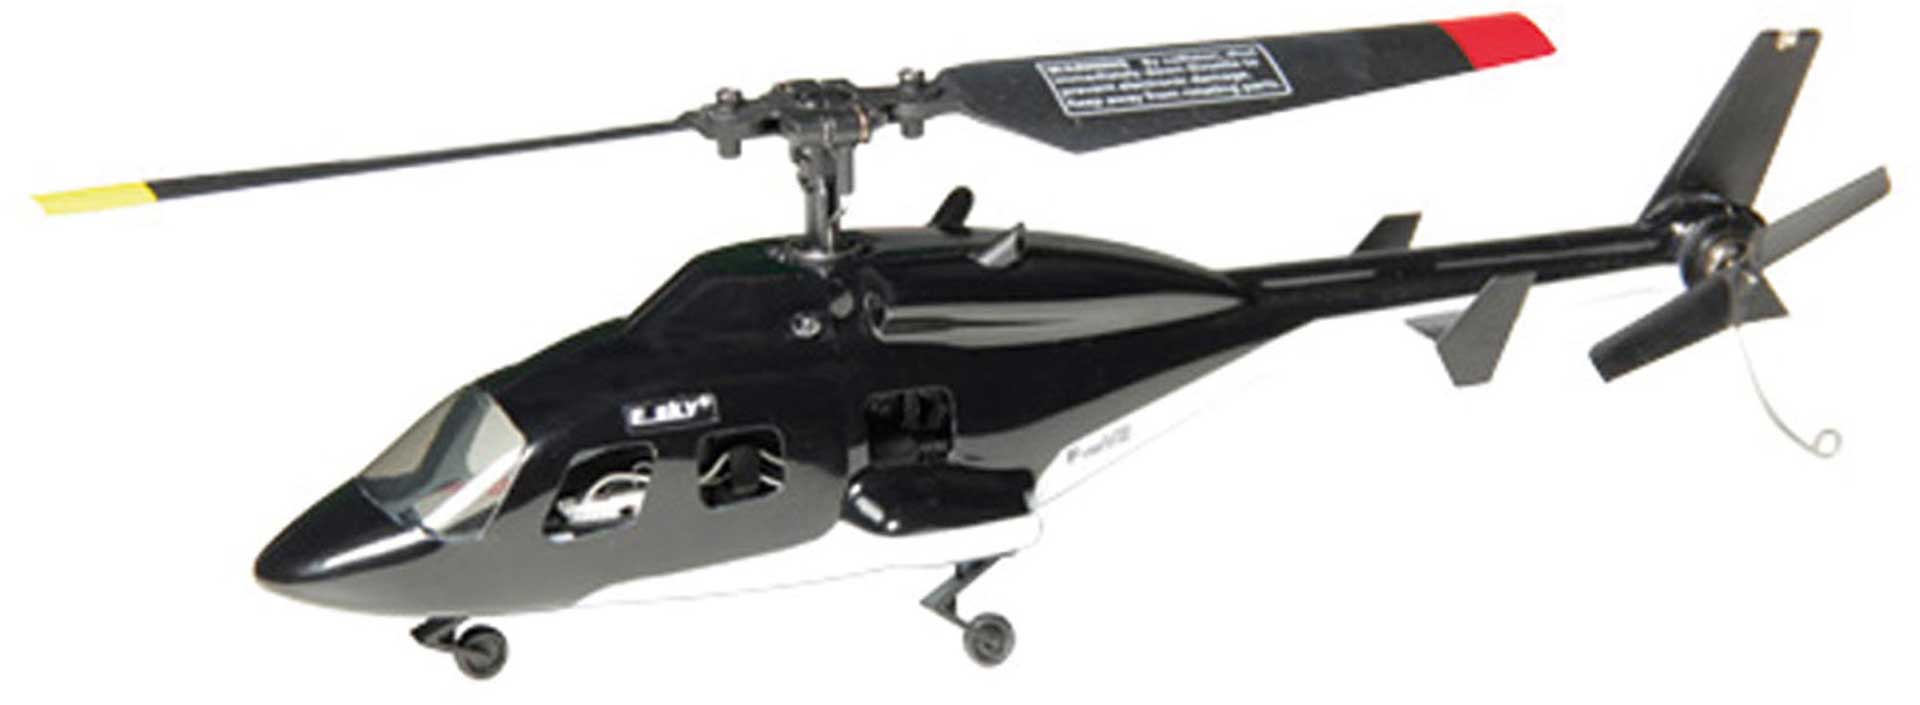 E-SKY F150 V2 MINI HELIKOPTER AIRWOLF RTF M1 Hubschrauber / Helikopter